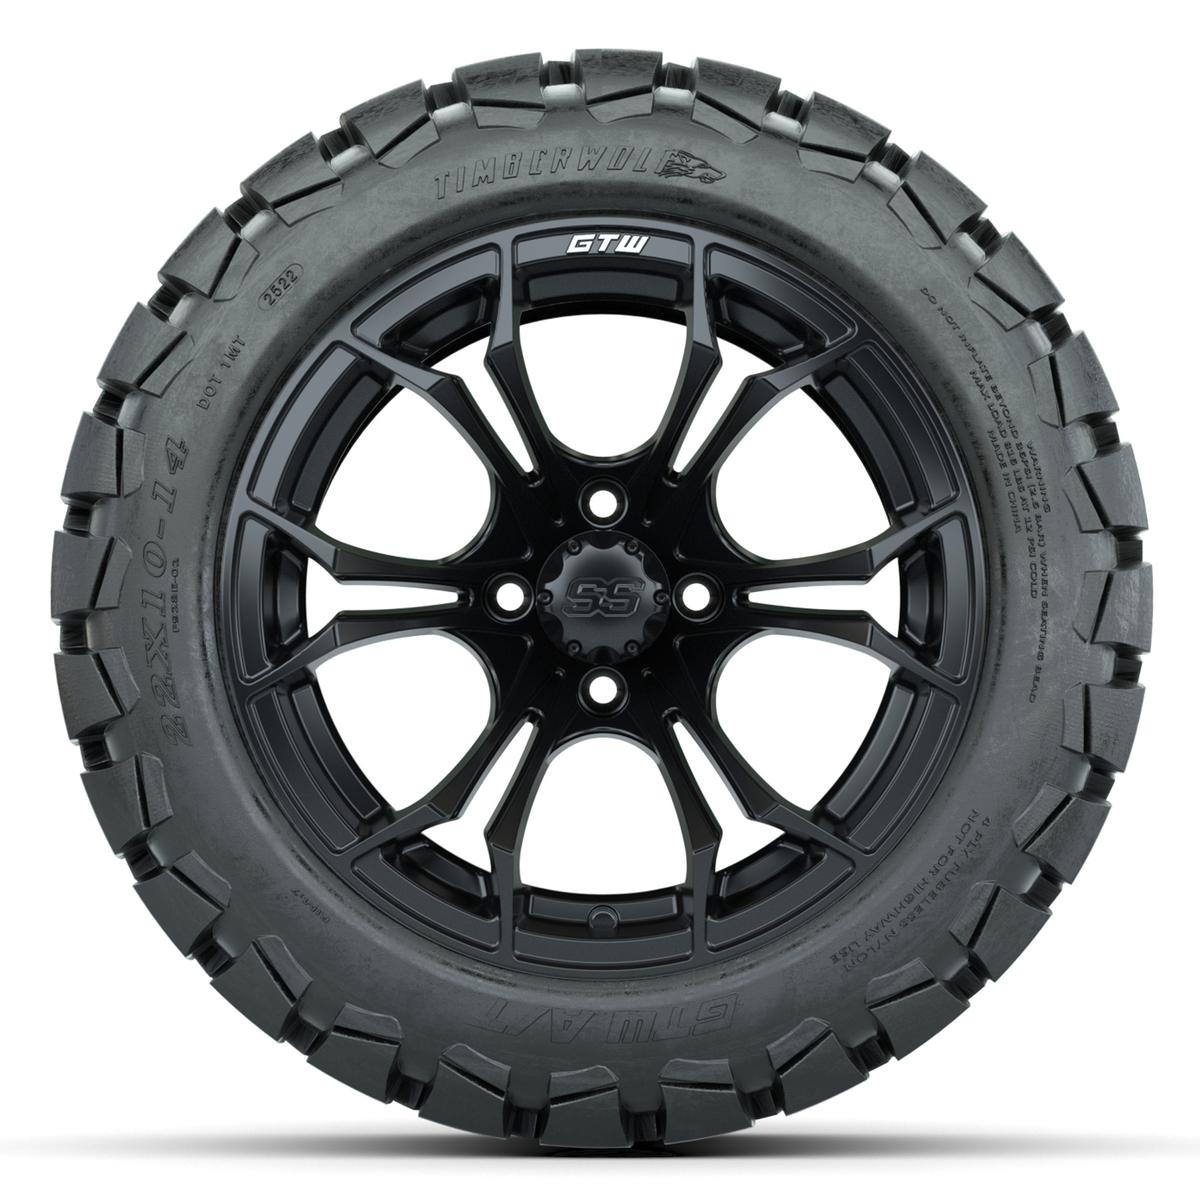 GTW Spyder Matte Black 14 in Wheels with 22x10-14 GTW Timberwolf All-Terrain Tires – Full Set